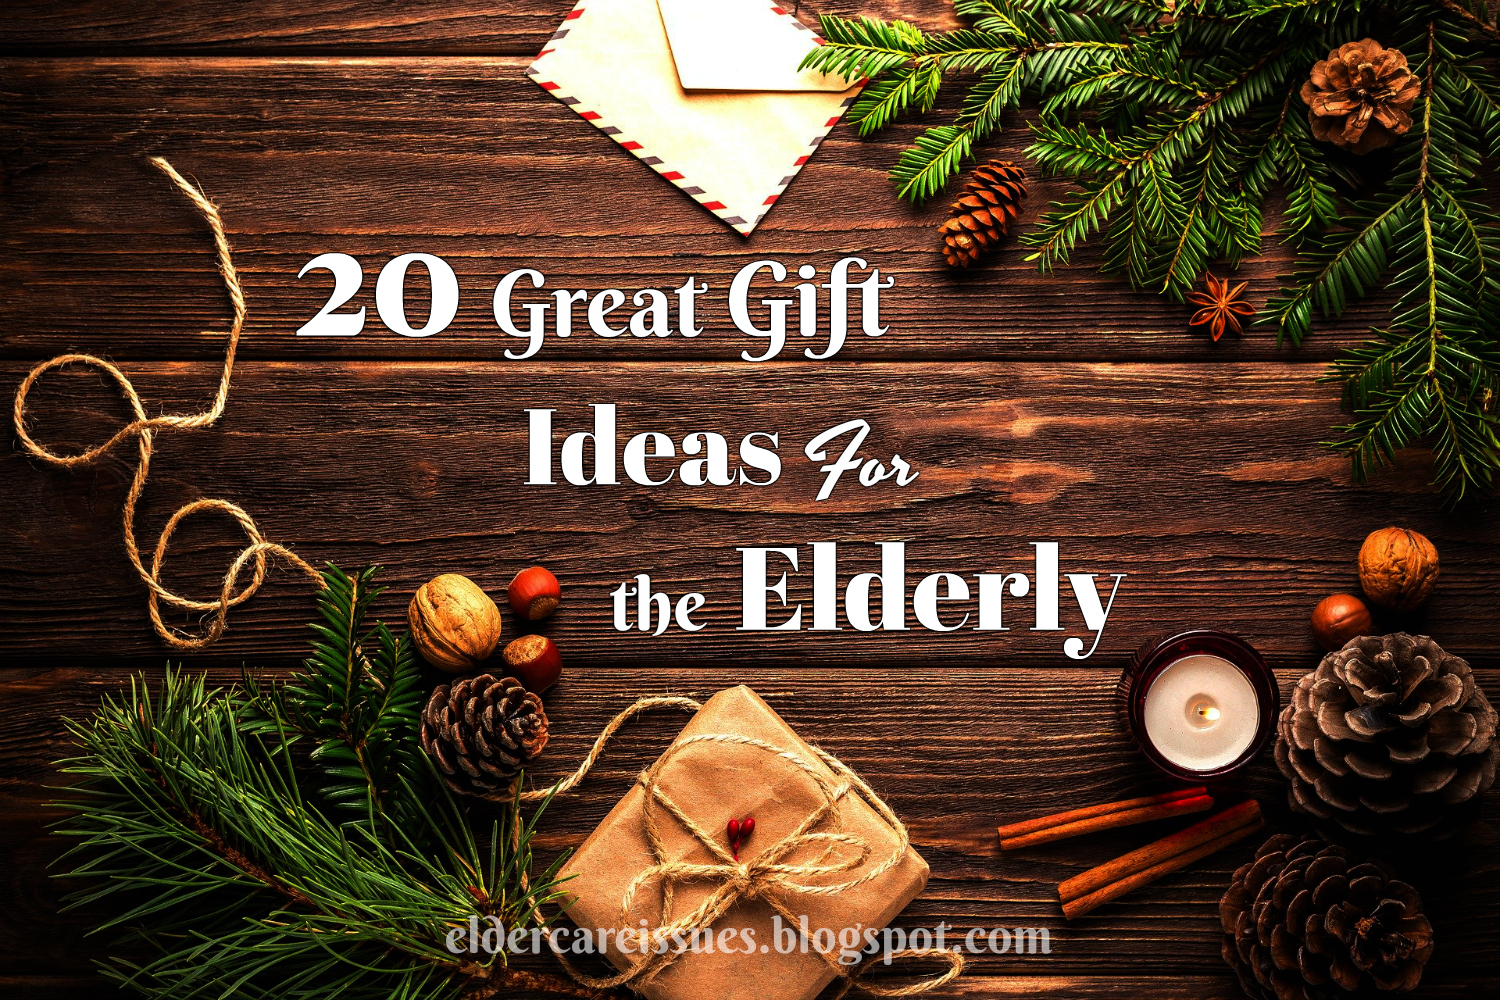 Elder Care Issues: 20 Great Gift Ideas for Senior Citizens